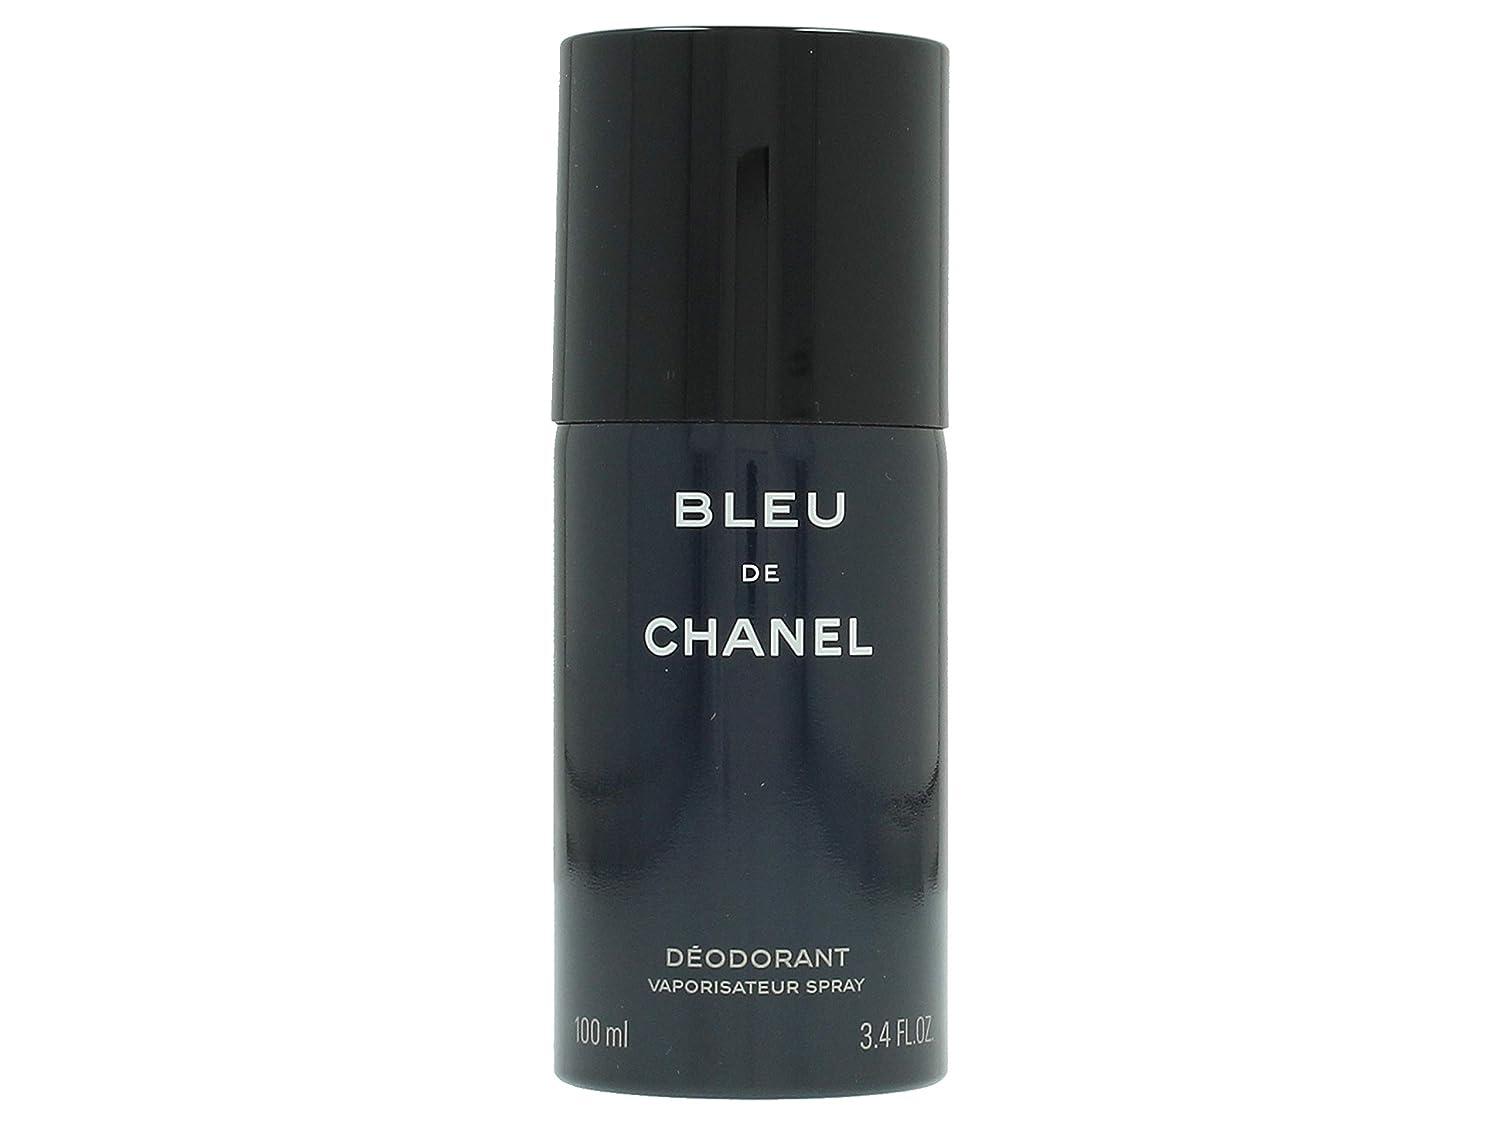 CHANEL Bleu De Deodorant Spray 3.4 Oz